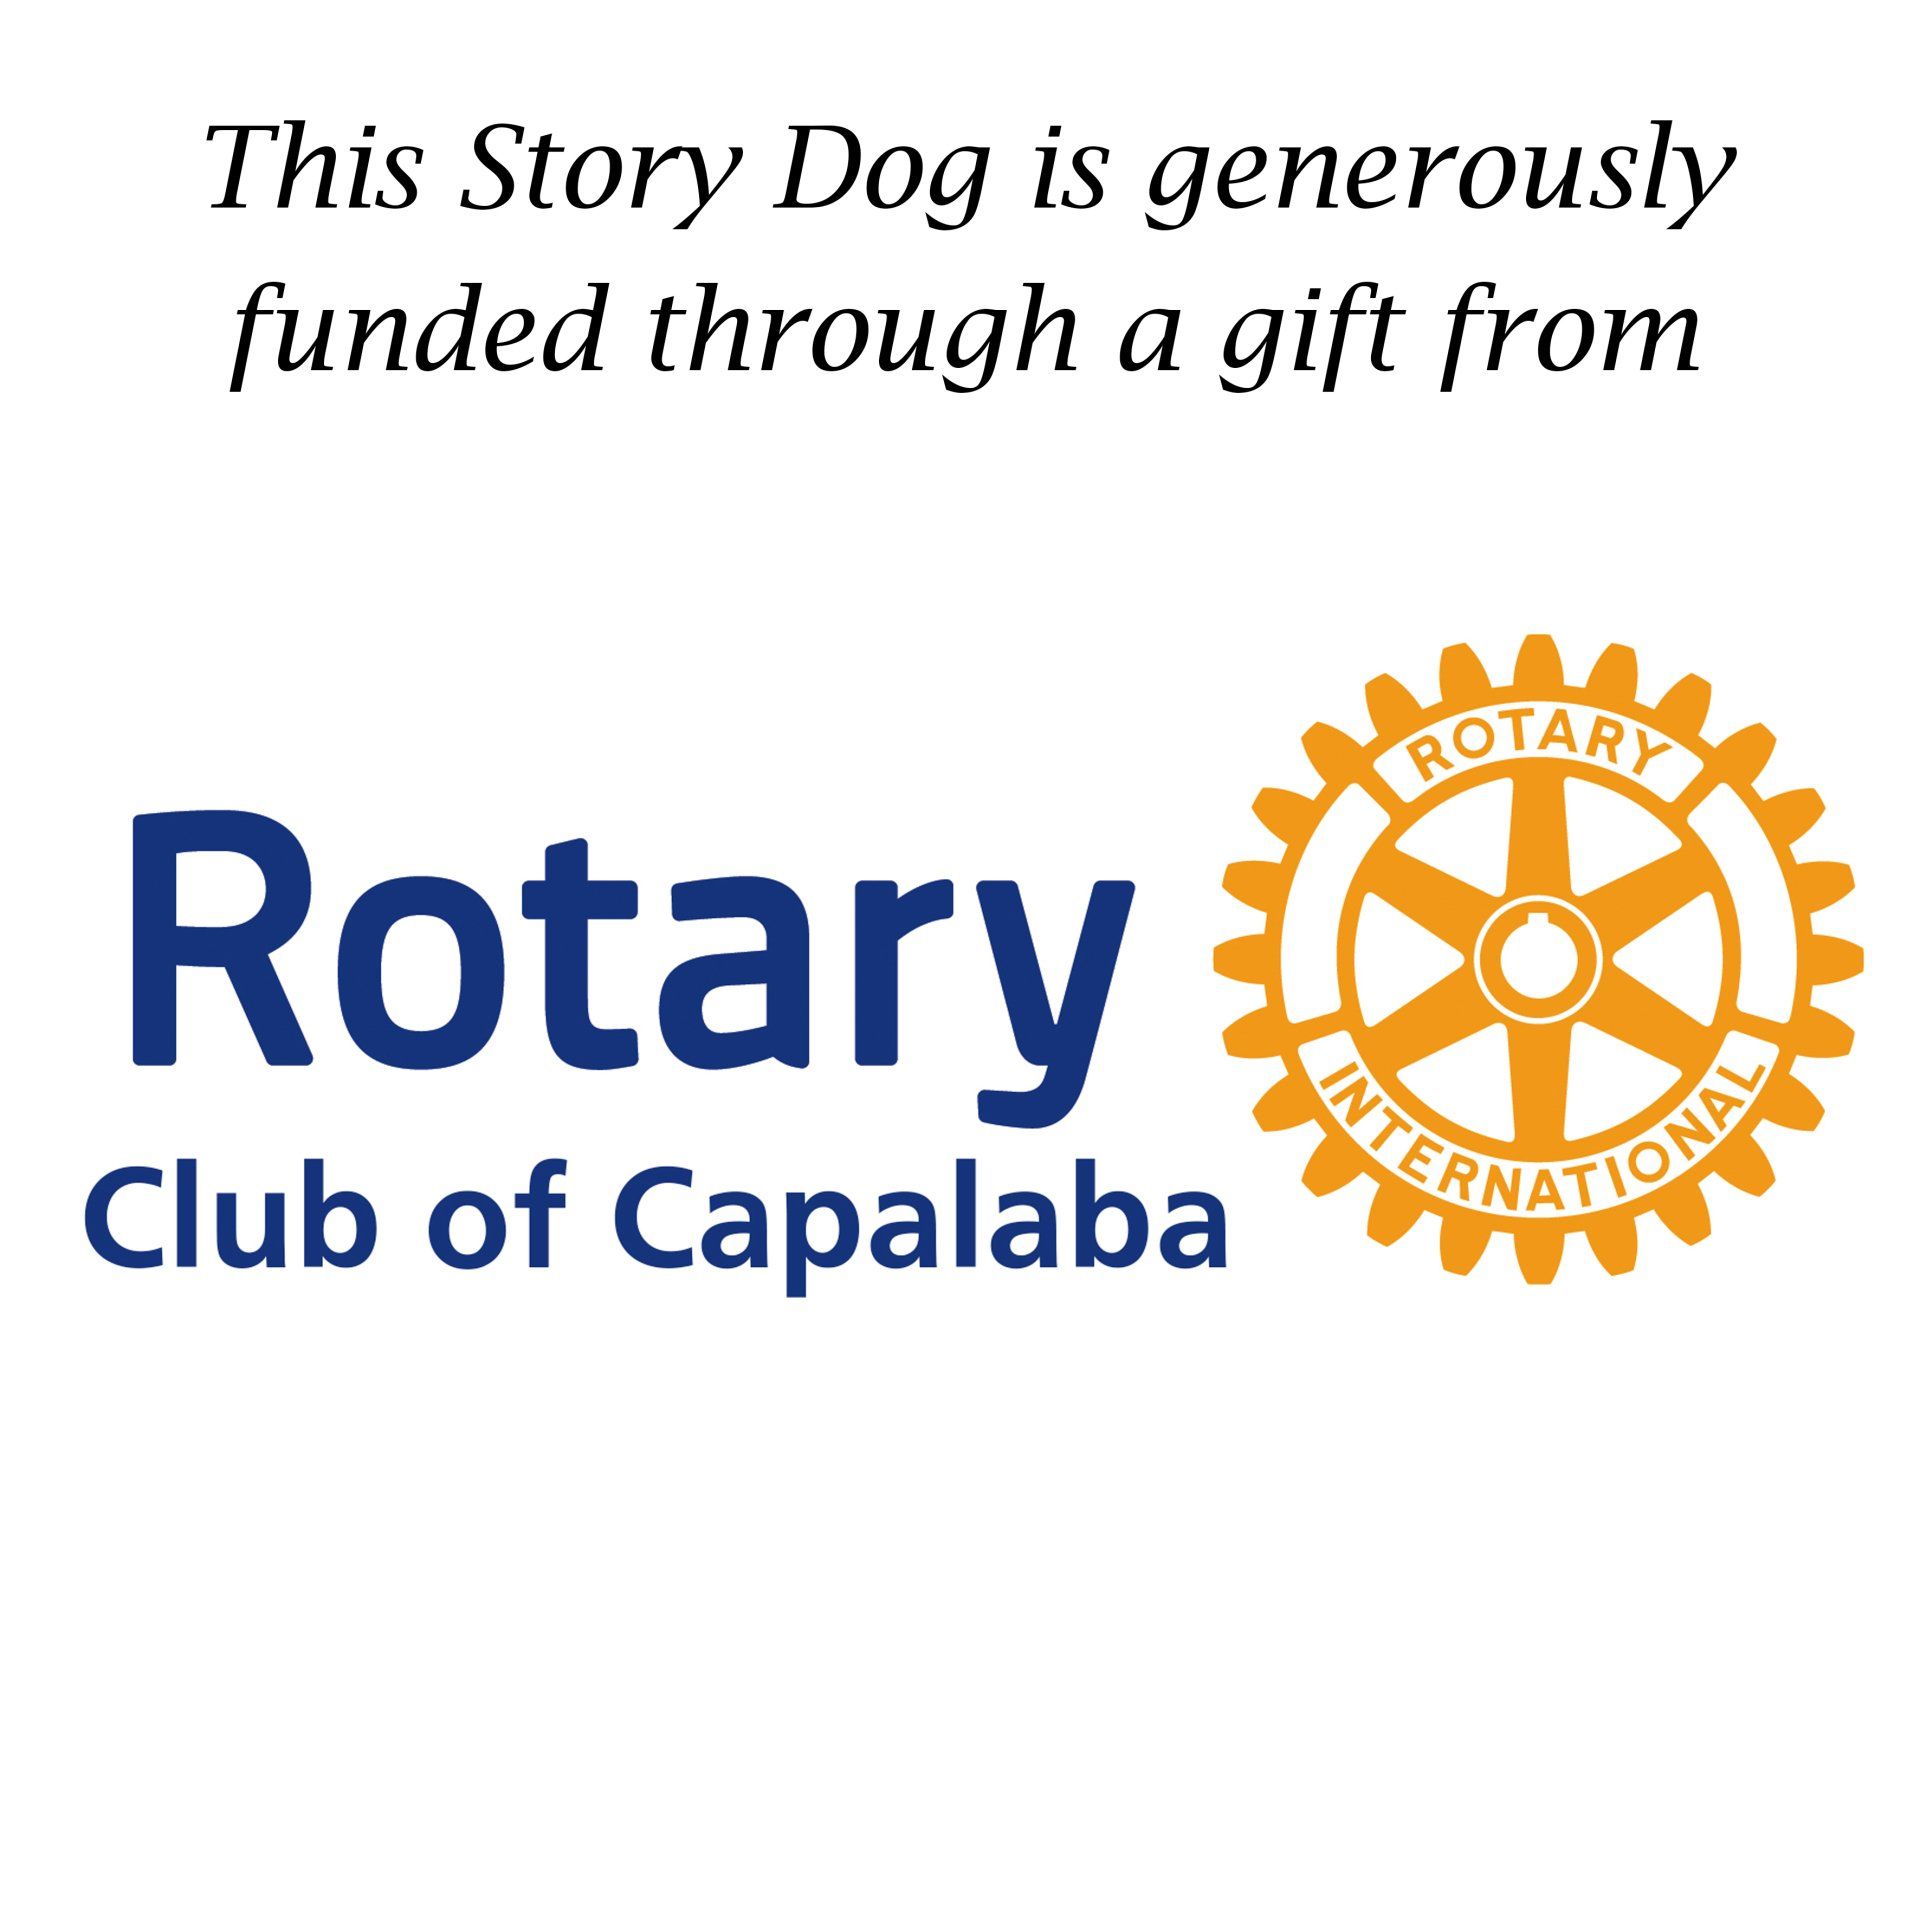 Rotary Club of Capalaba